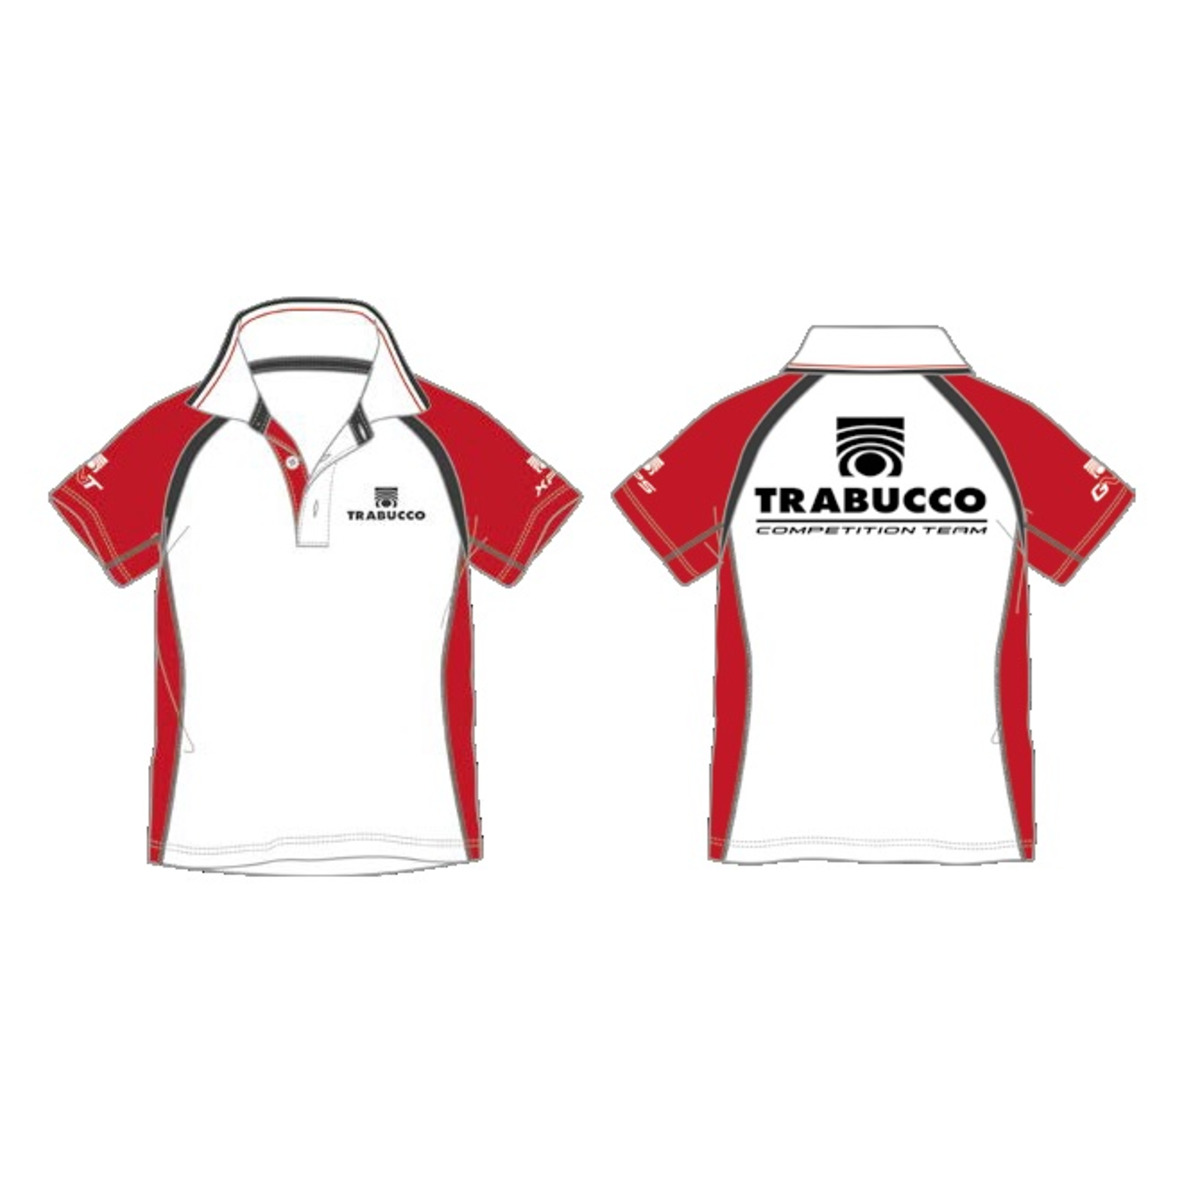 Trabucco Gtn Teck Polo Shirt - XXXXL